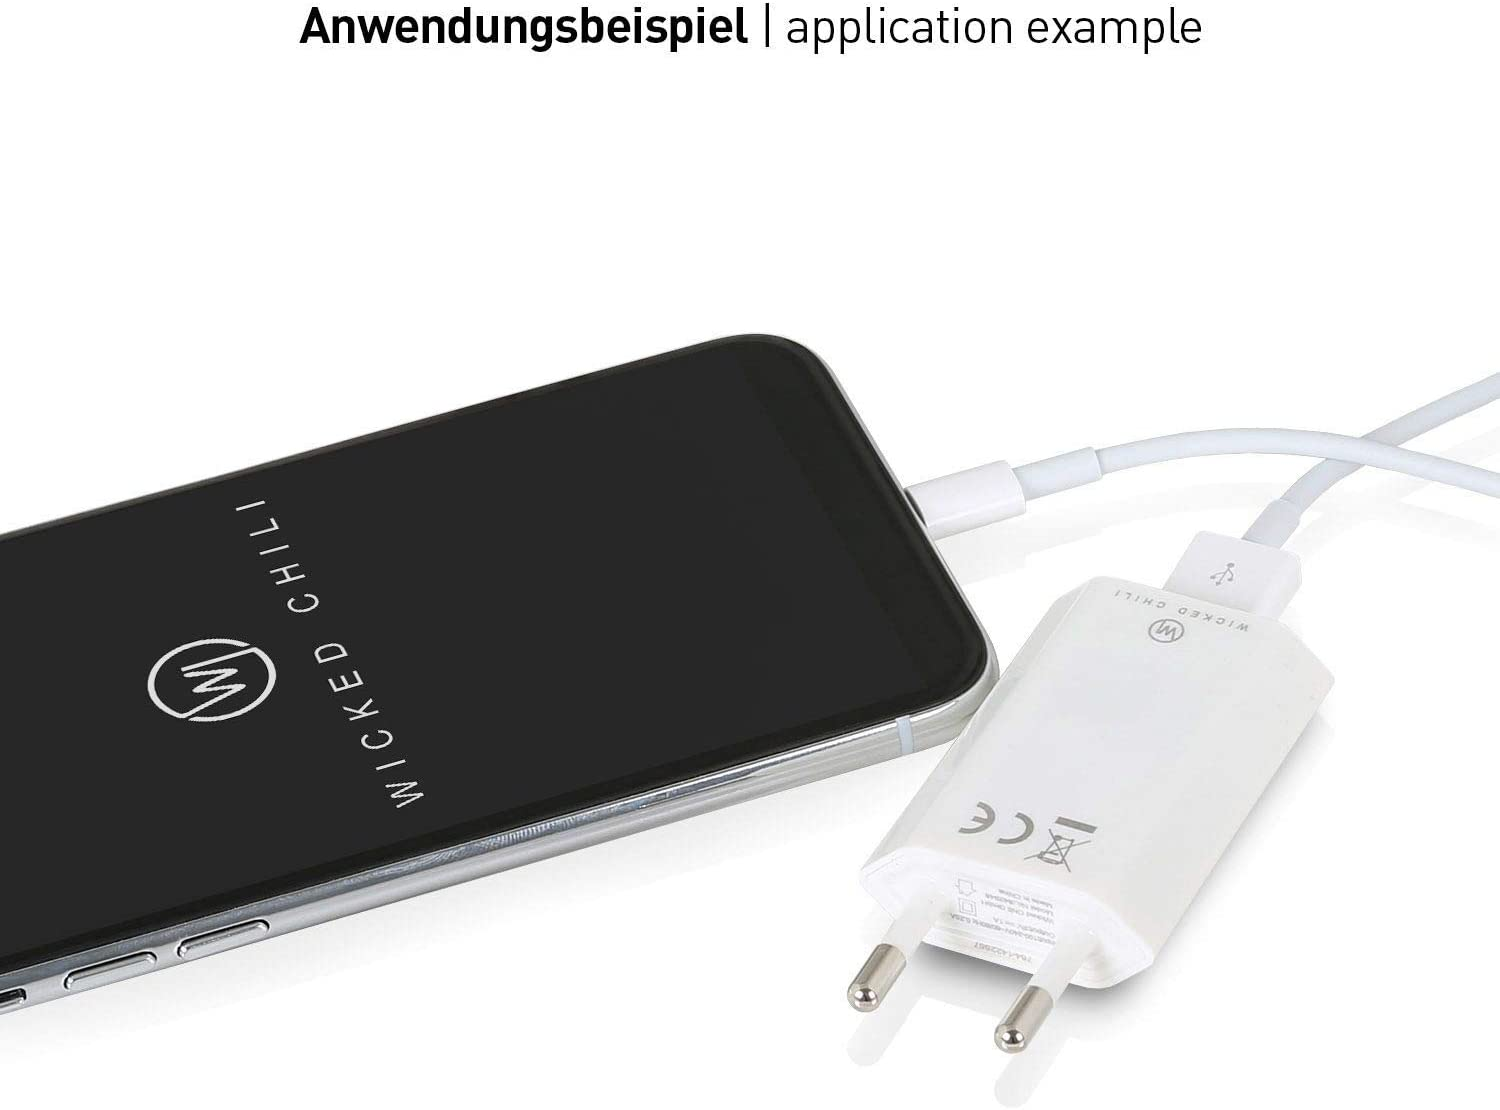 WICKED CHILI 1x Pro Series Ladegerät Power weiß USB Lautsprecher Handy / Adapter Netzteil Bluetooth Adapter USB 5W (1A)